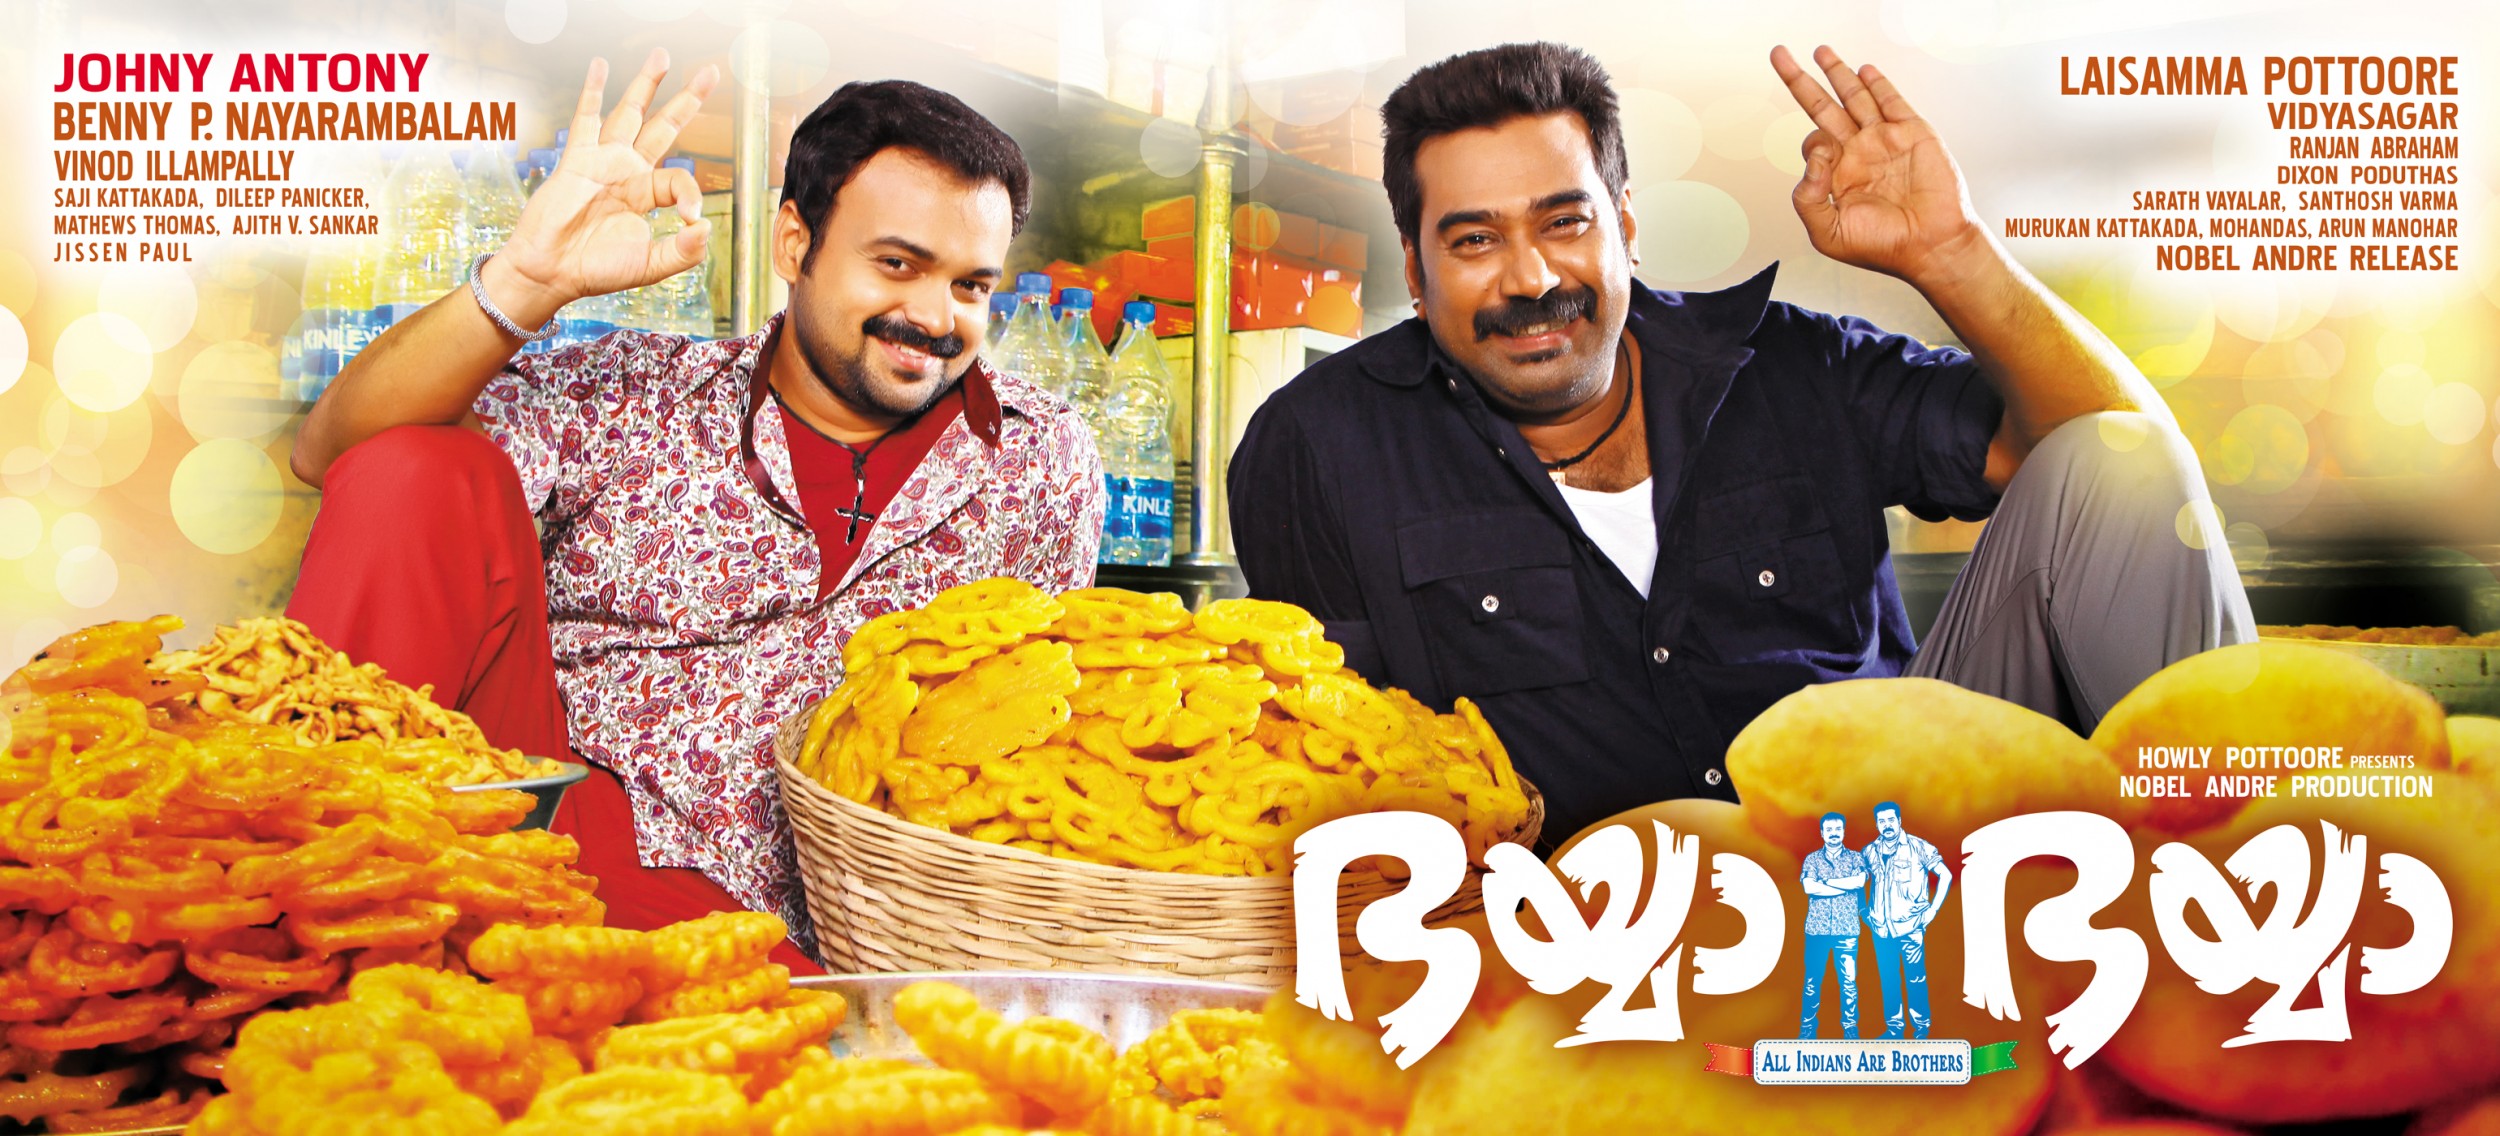 Mega Sized Movie Poster Image for Bhaiyya Bhaiyya (#1 of 2)